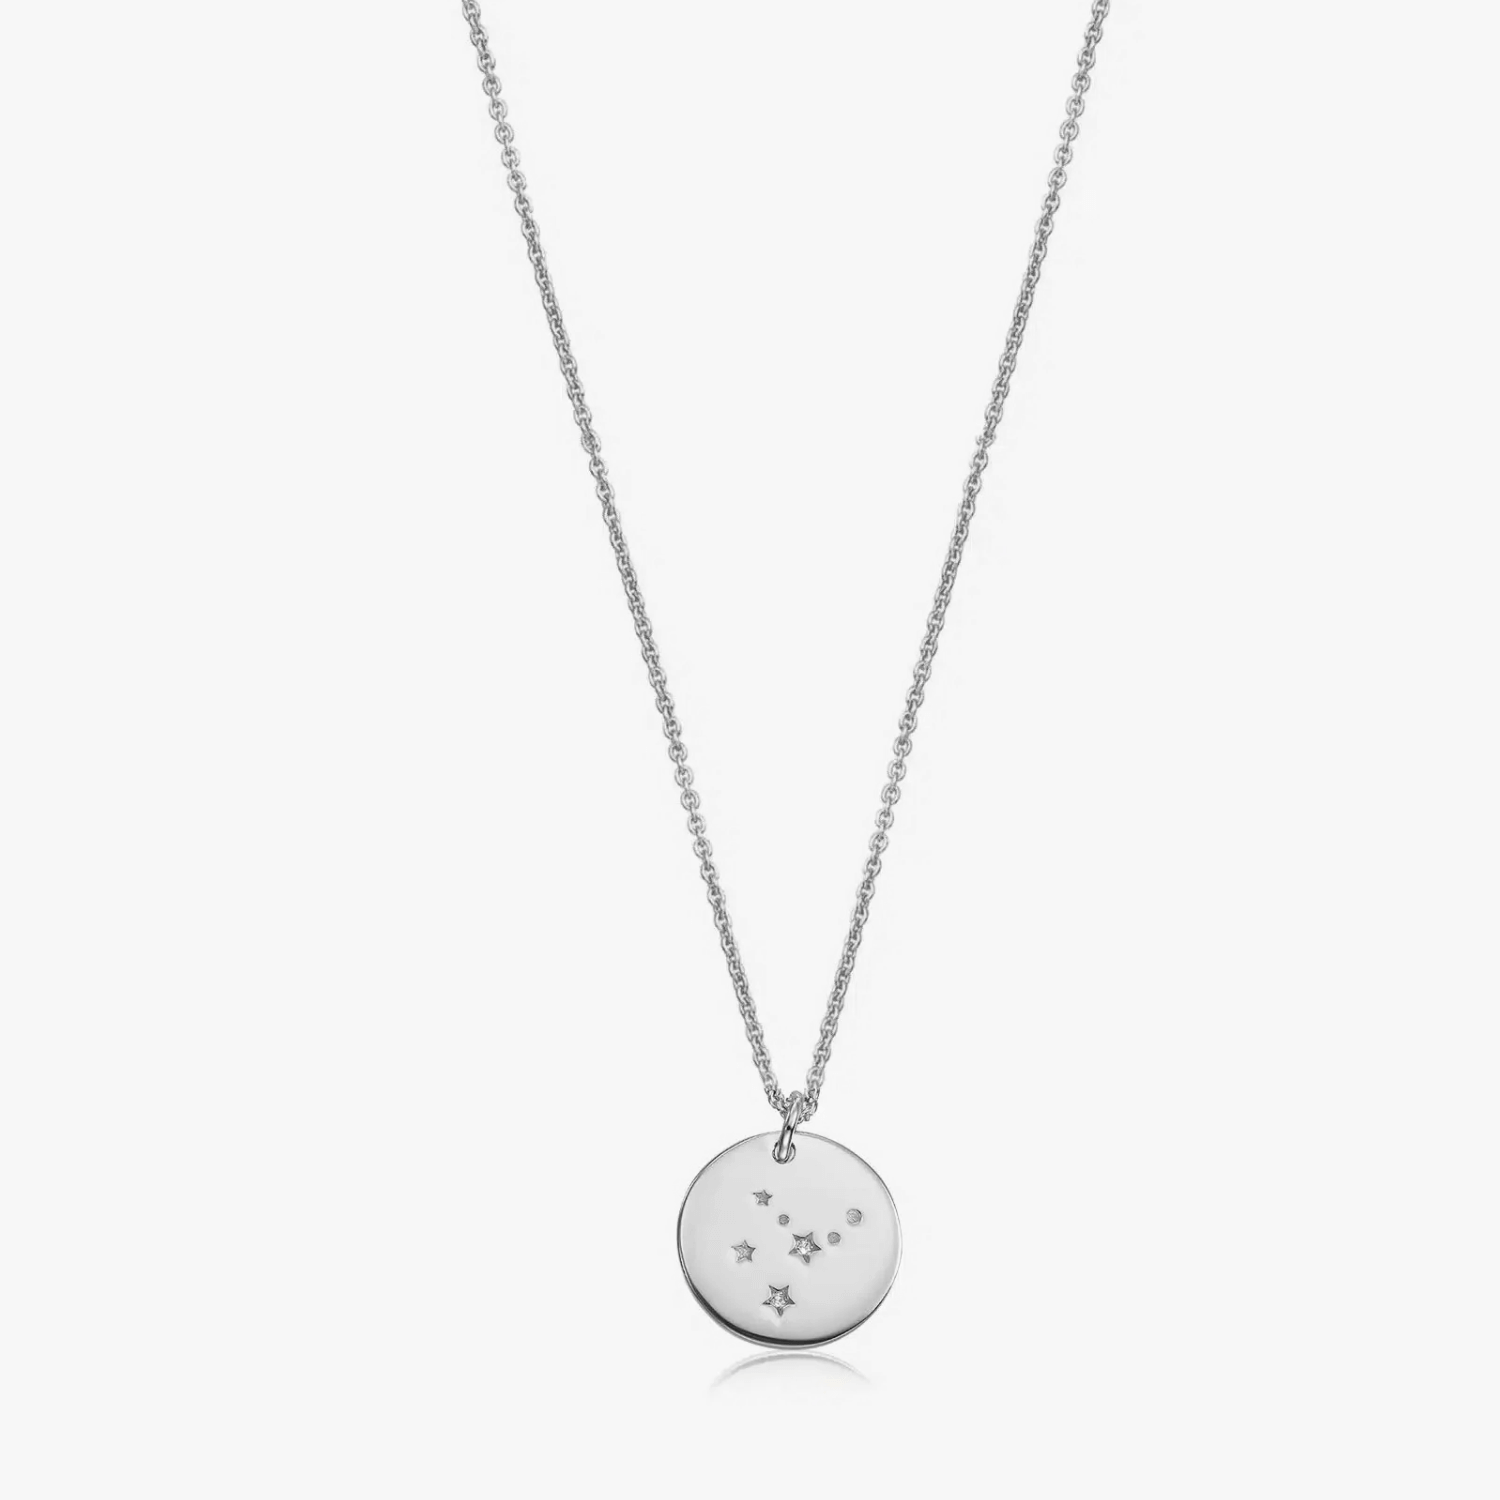 Silver Zodiac - Virgo necklace